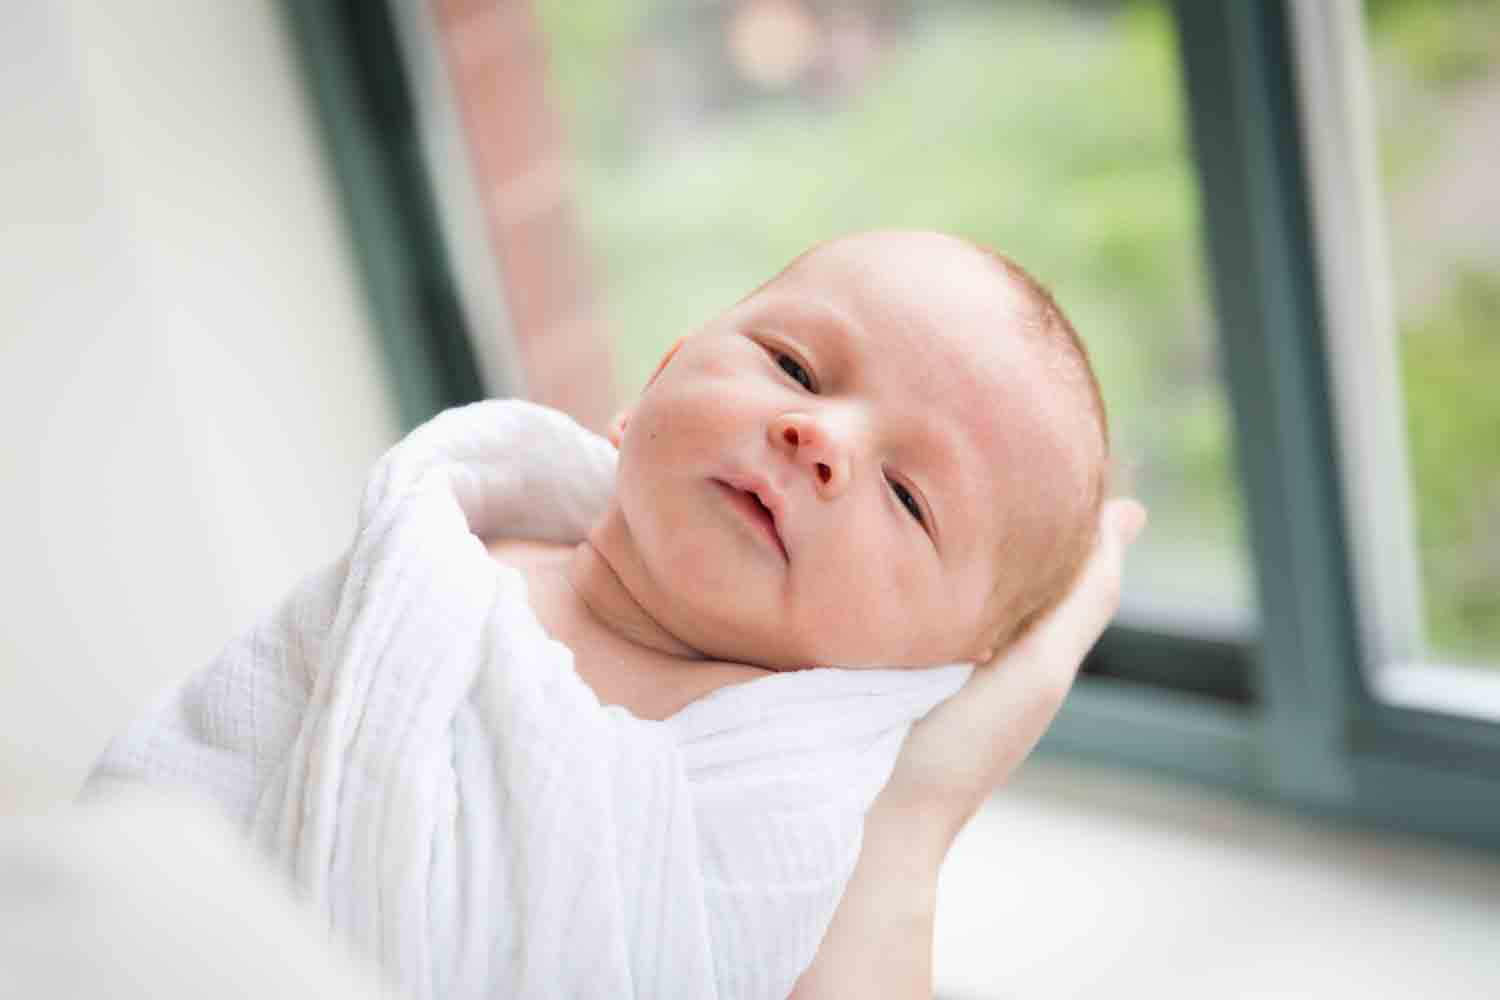 Close up of newborn baby held in front of window